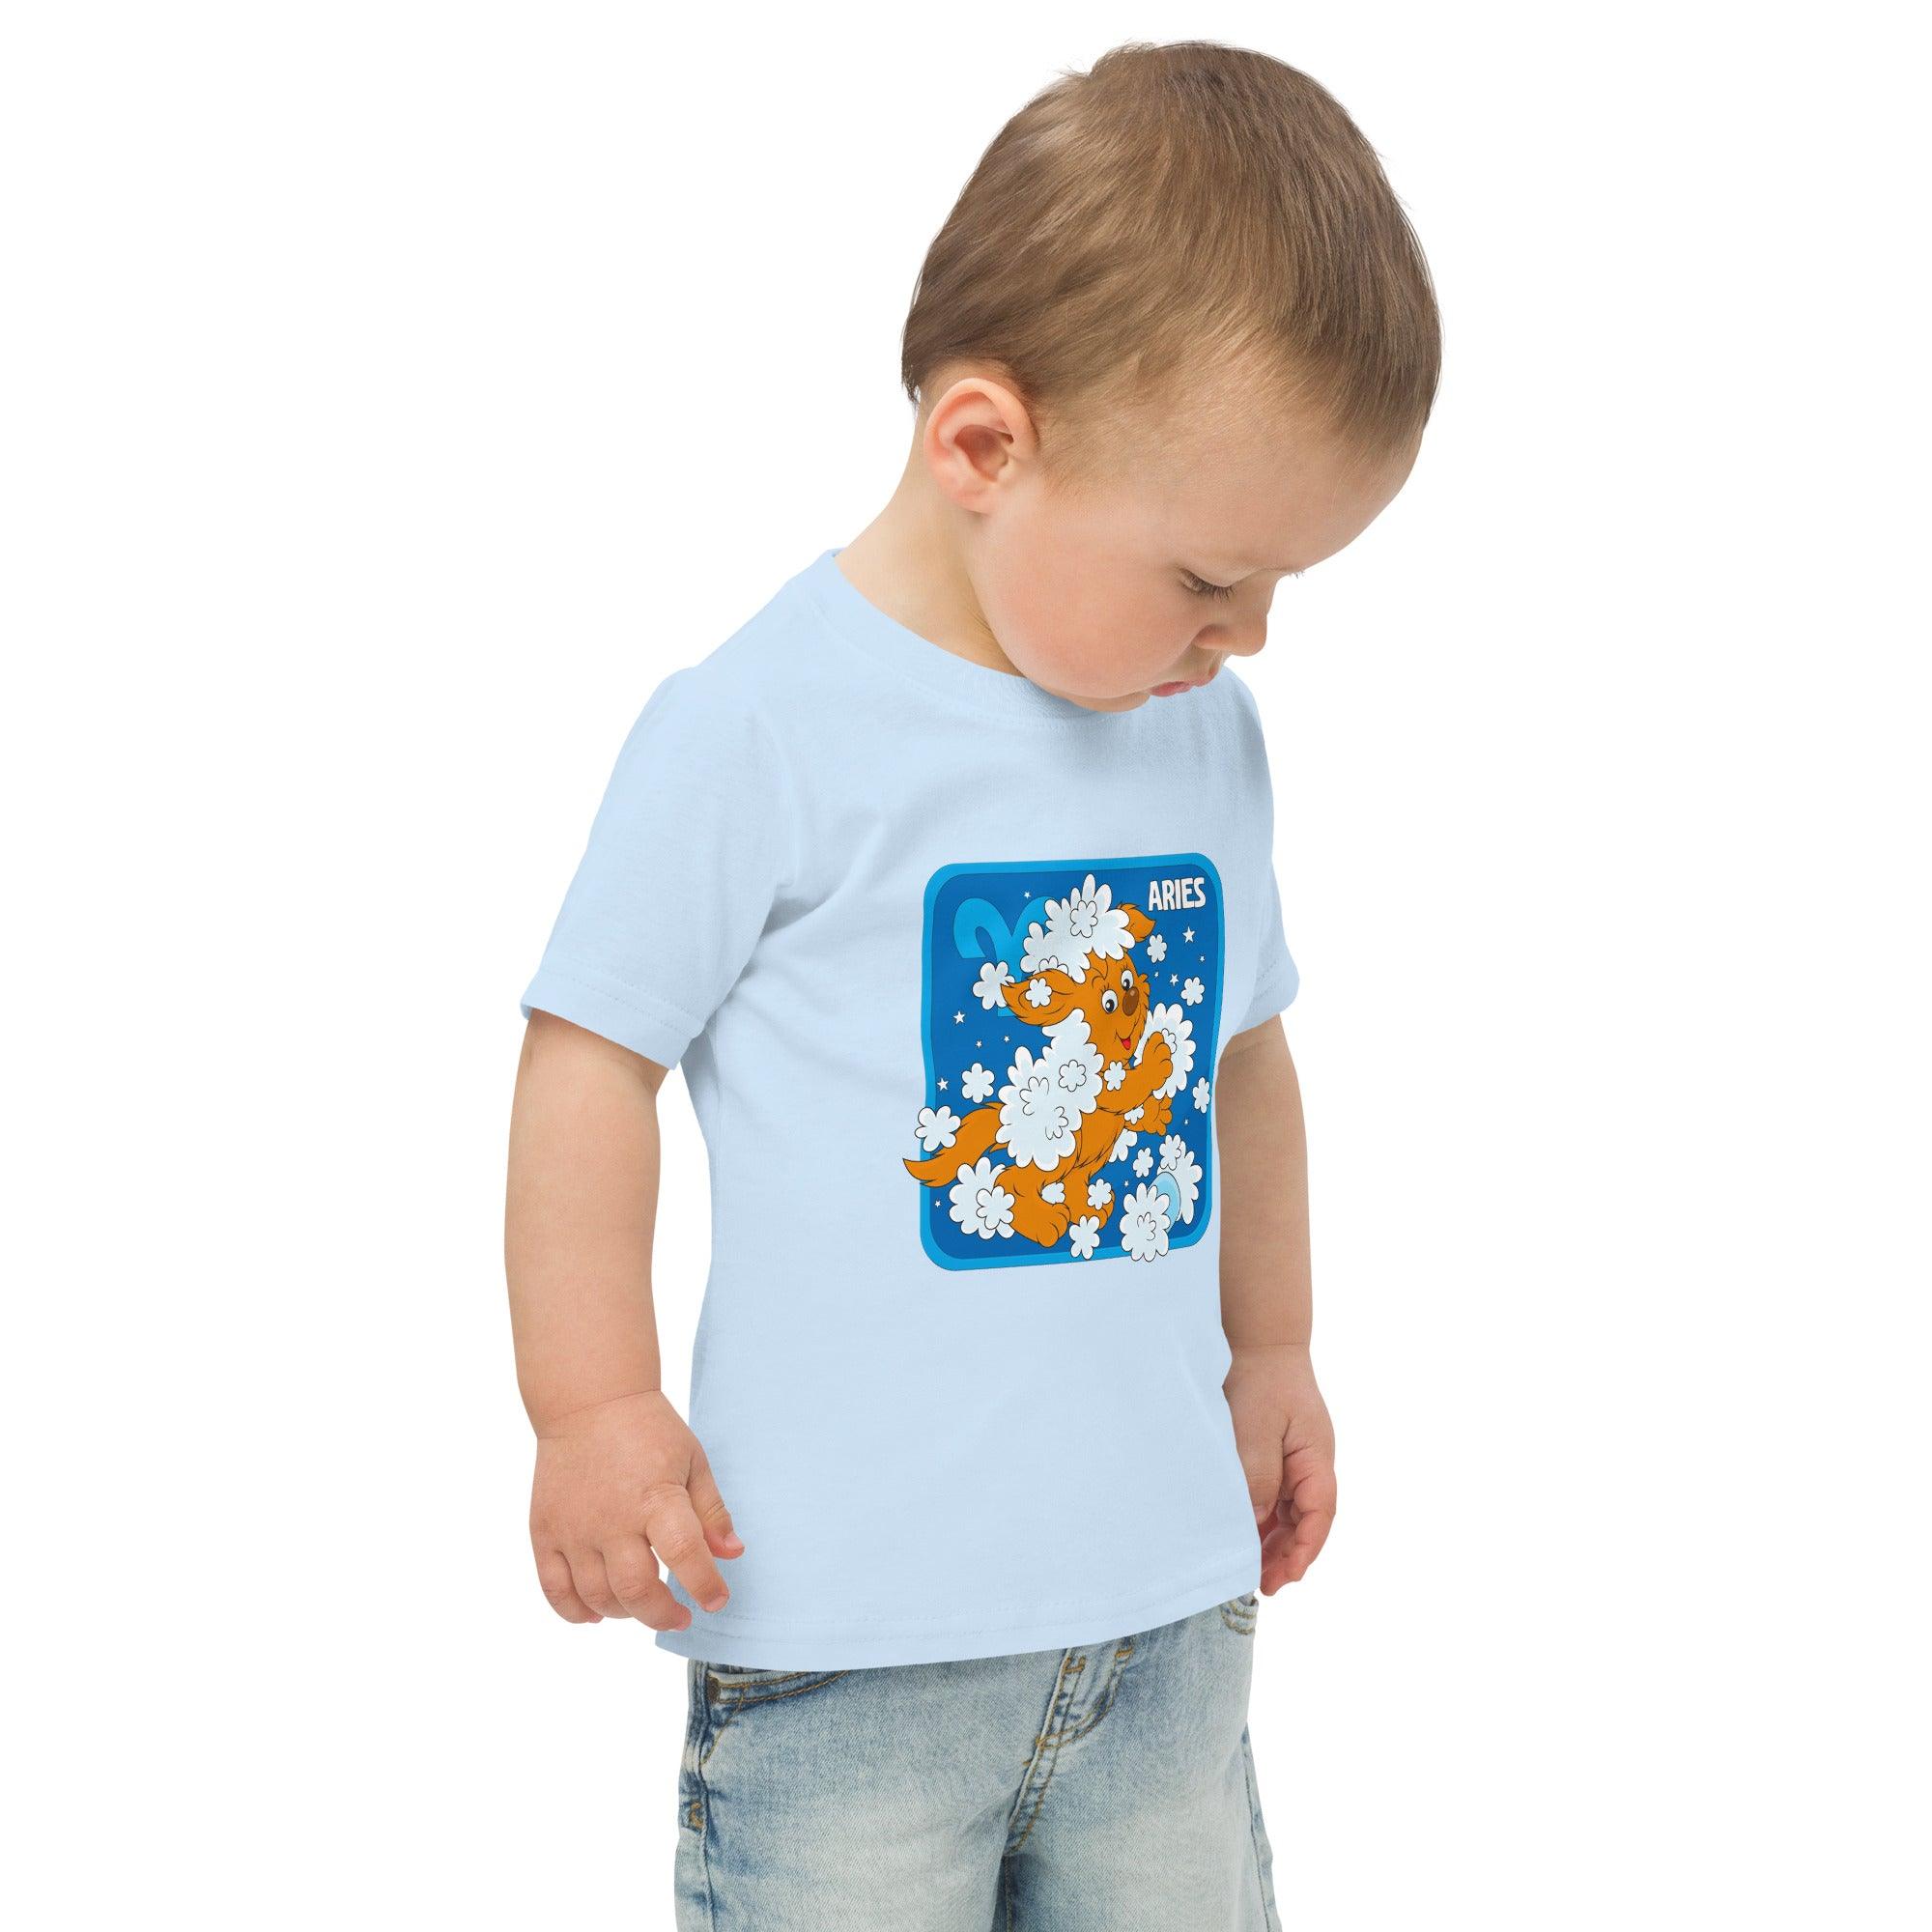 Constellations Zodiac Toddler Tee - Beyond T-shirts